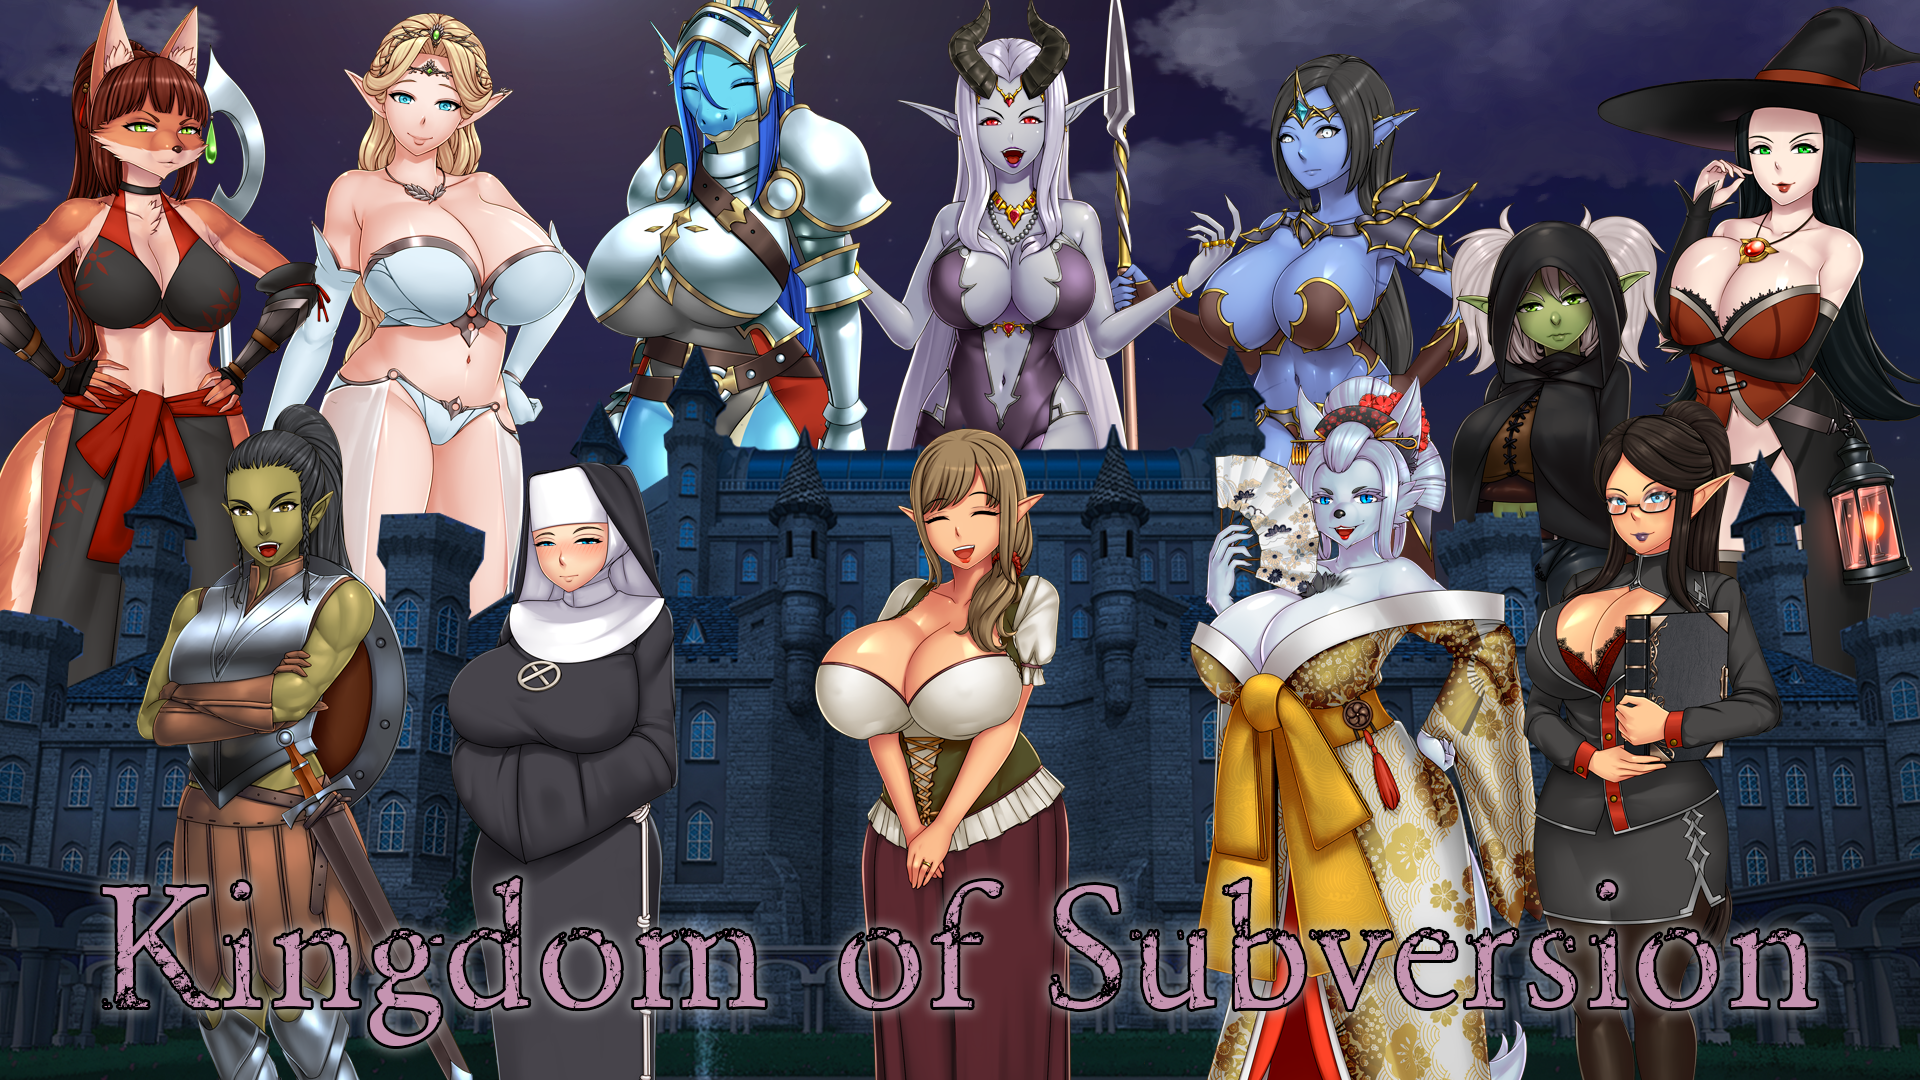 Kingdom of subversion porn game